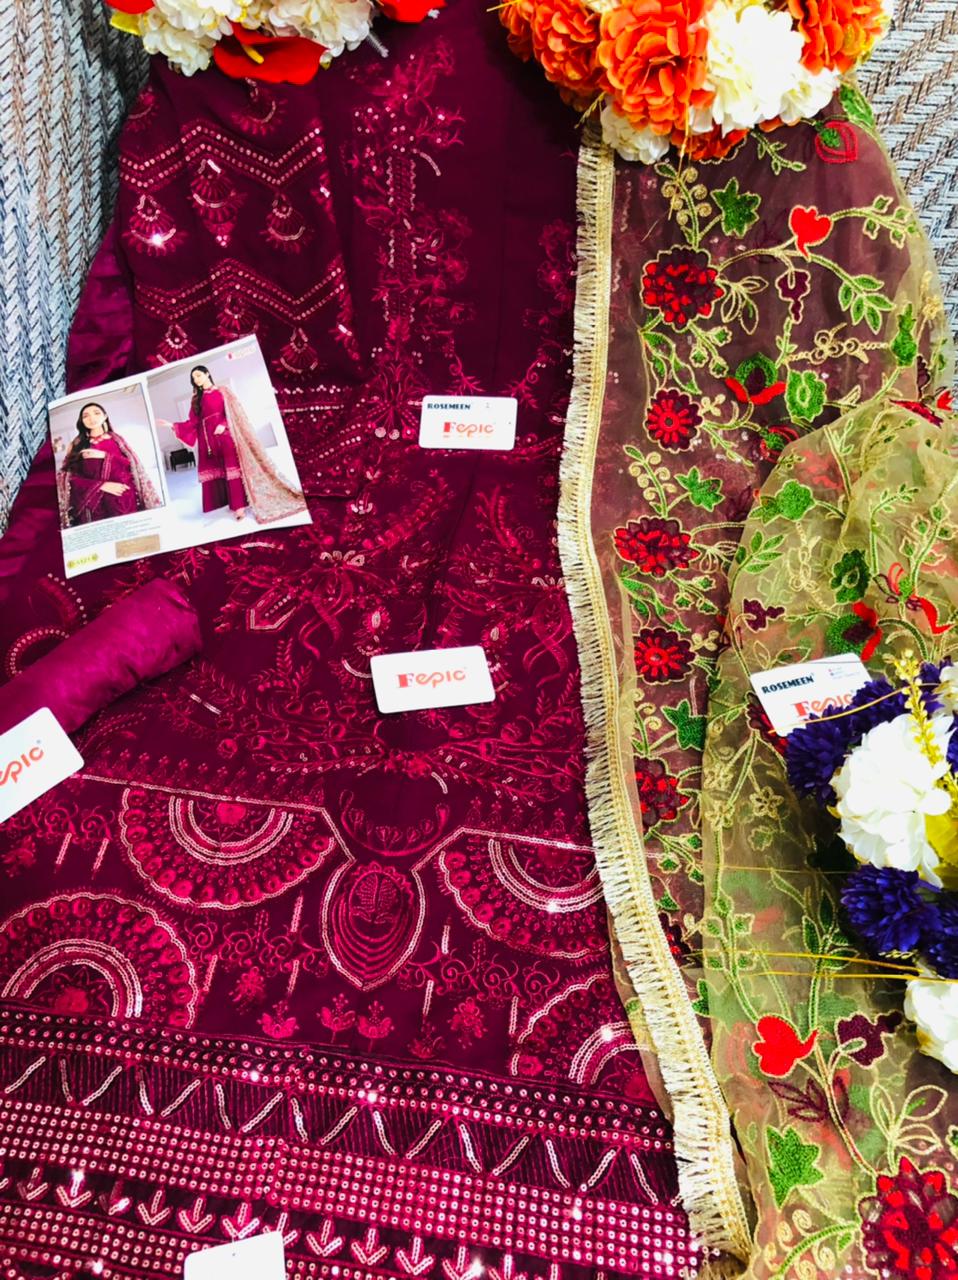 Rosemeen Flowerpot D 5121 Fepic Georgette Pearl Work Pakistani Salwar Suits